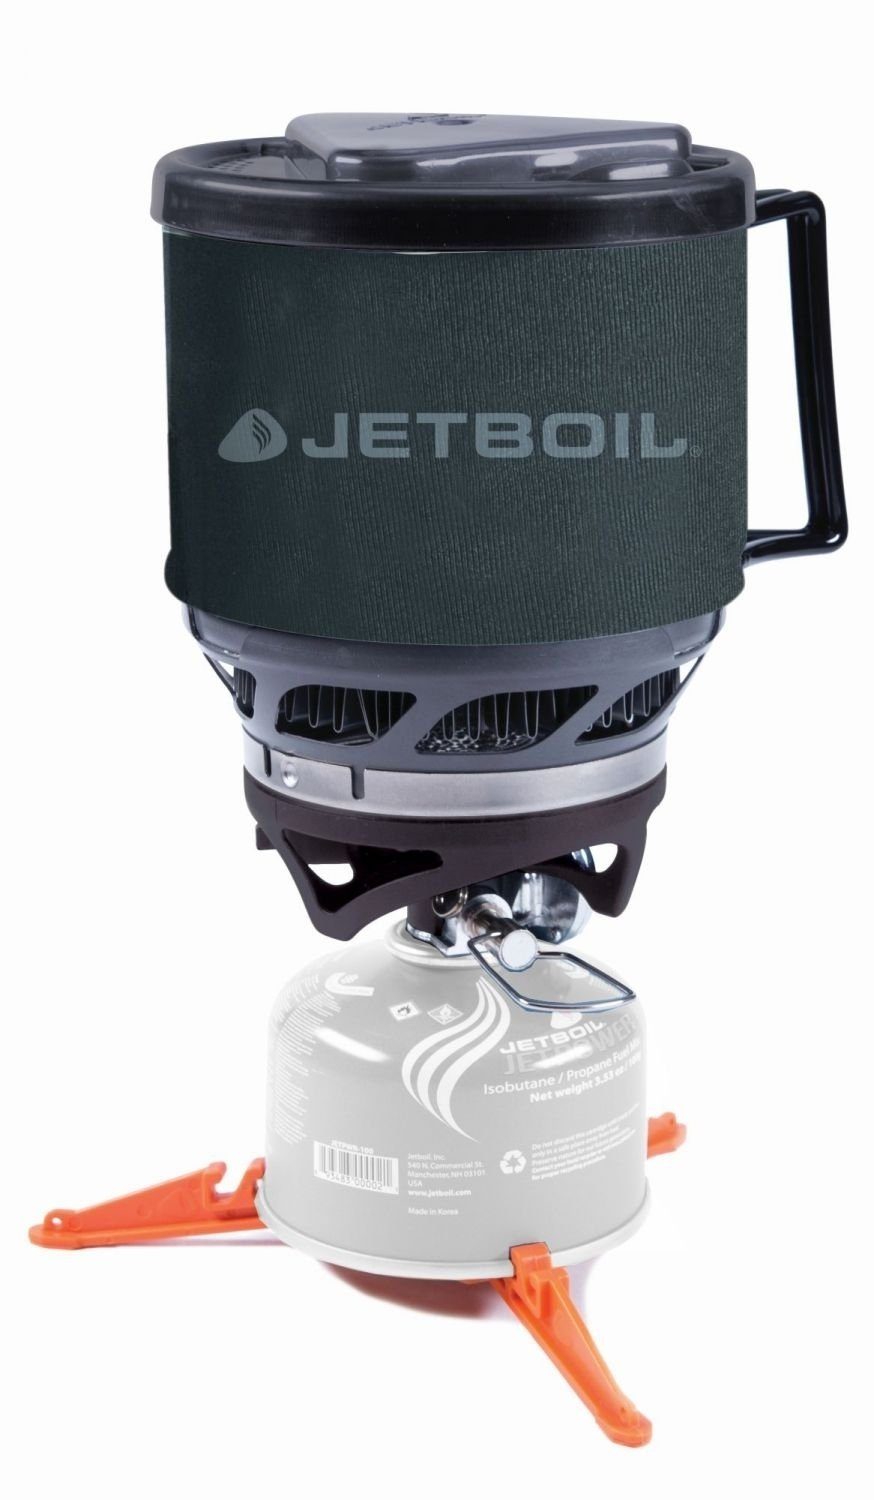 Jetboil Jetboil MiniMo Kochsystem Gaskocher carbon